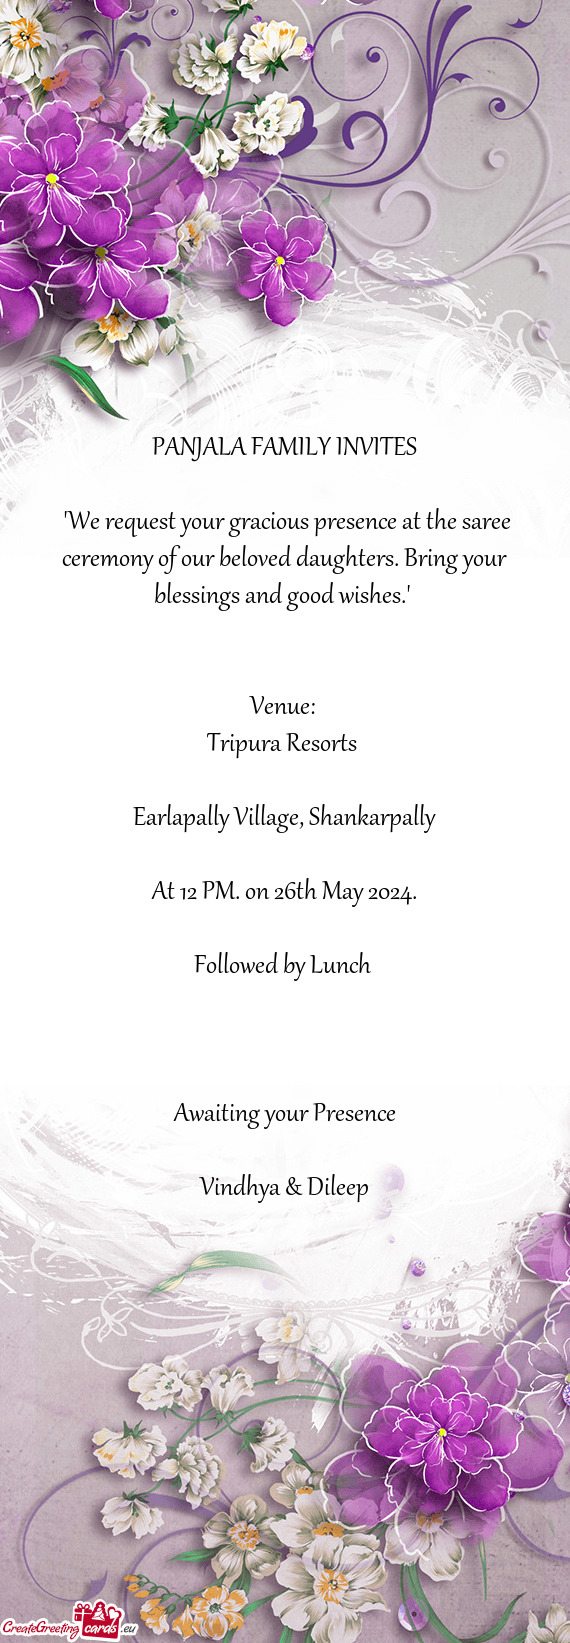 PANJALA FAMILY INVITES